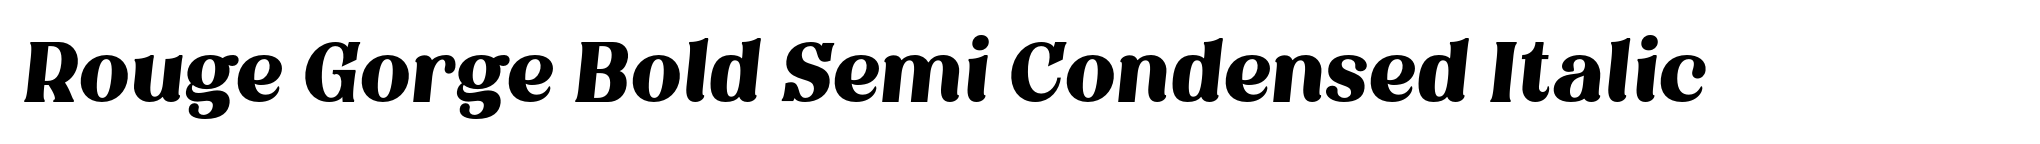 Rouge Gorge Bold Semi Condensed Italic image